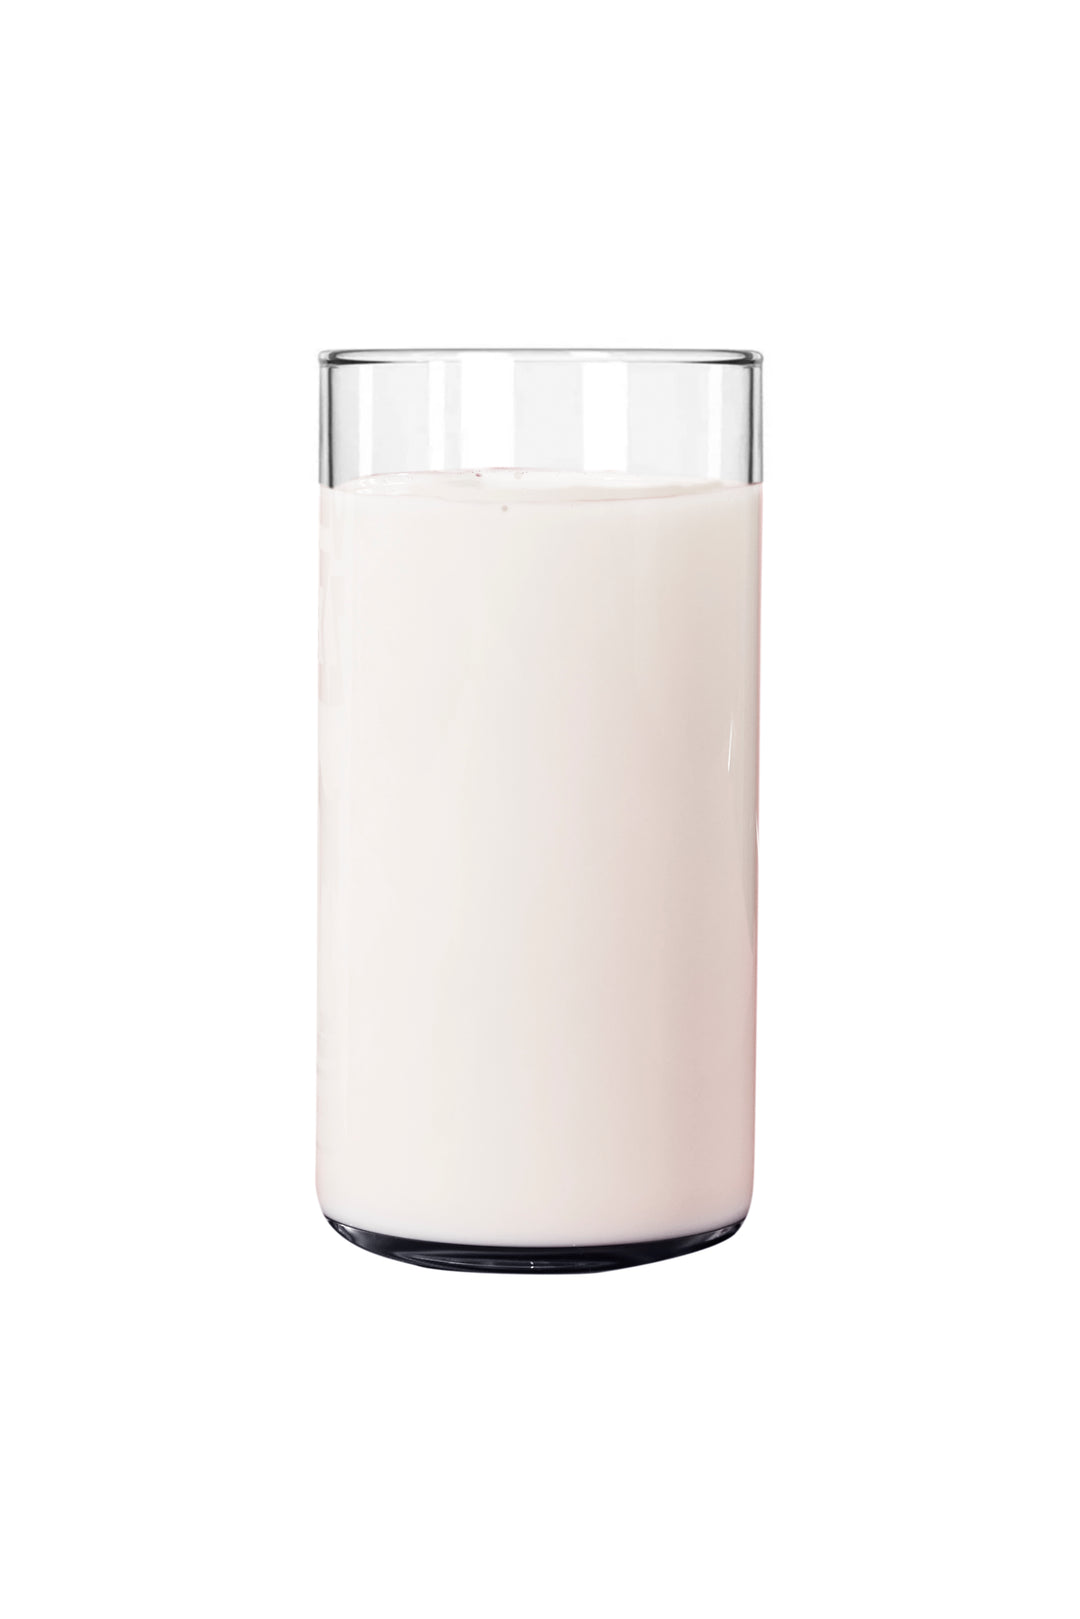 Not Co Notmilk Shelf-Stable Whole Plant-Based Milk-8 fl oz.-12/Case